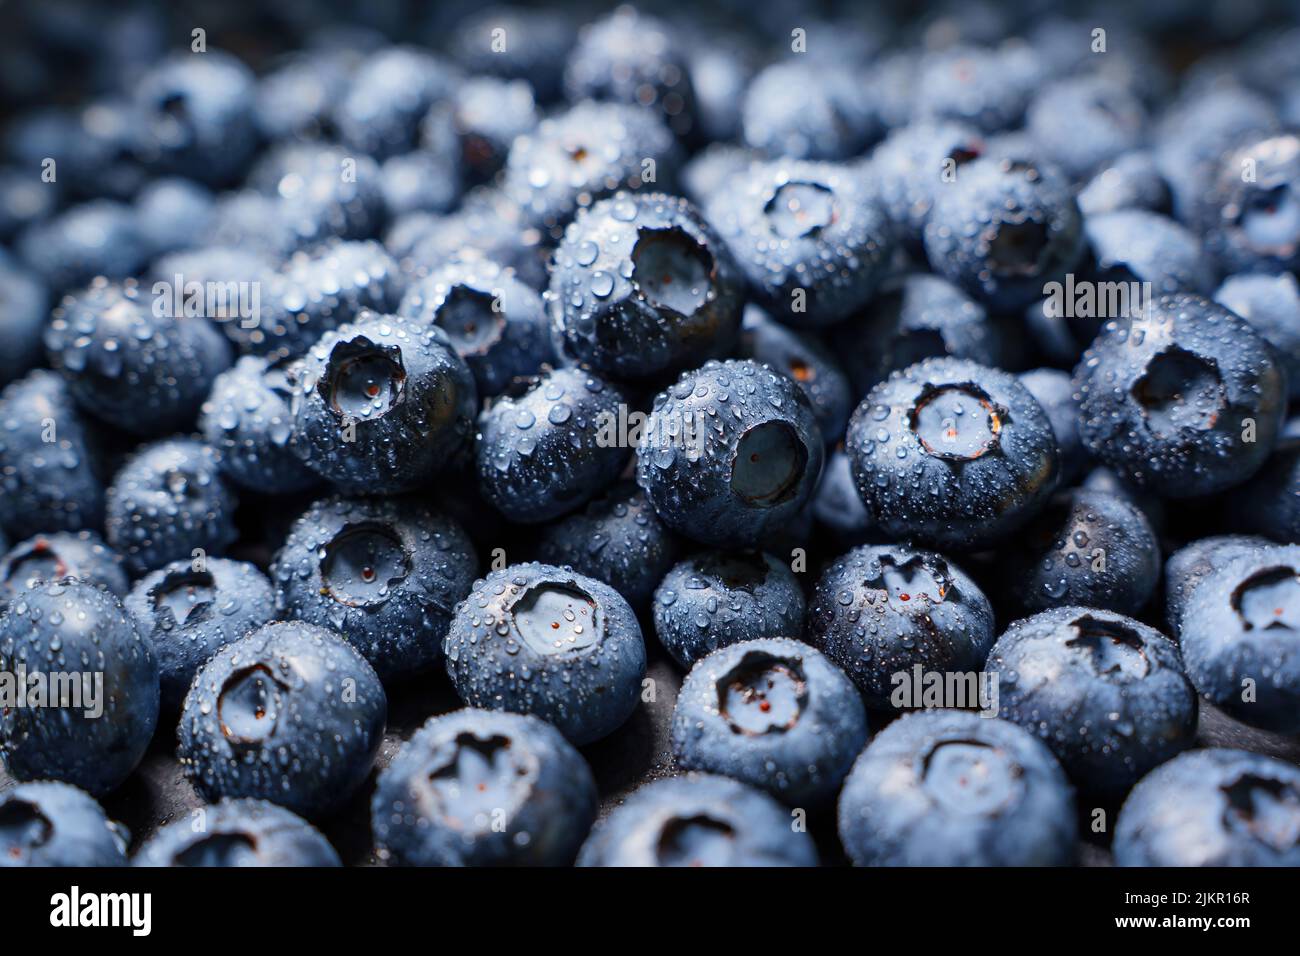 Ripe wet blueberries background Stock Photo